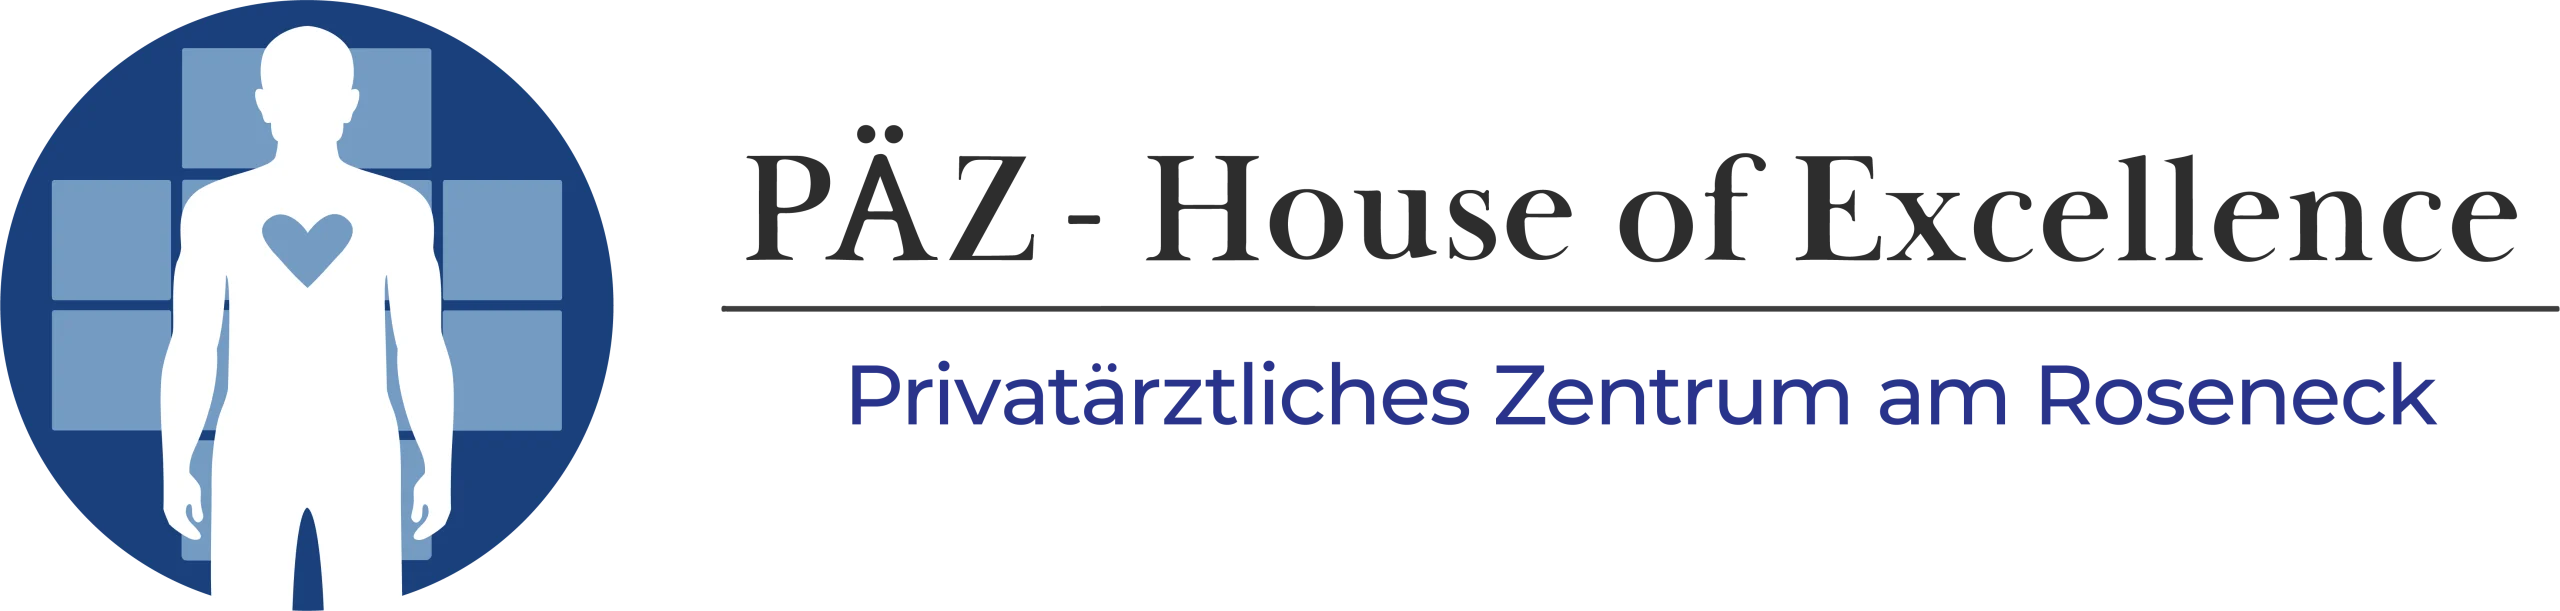 PÄZ - House of Excellence Logo